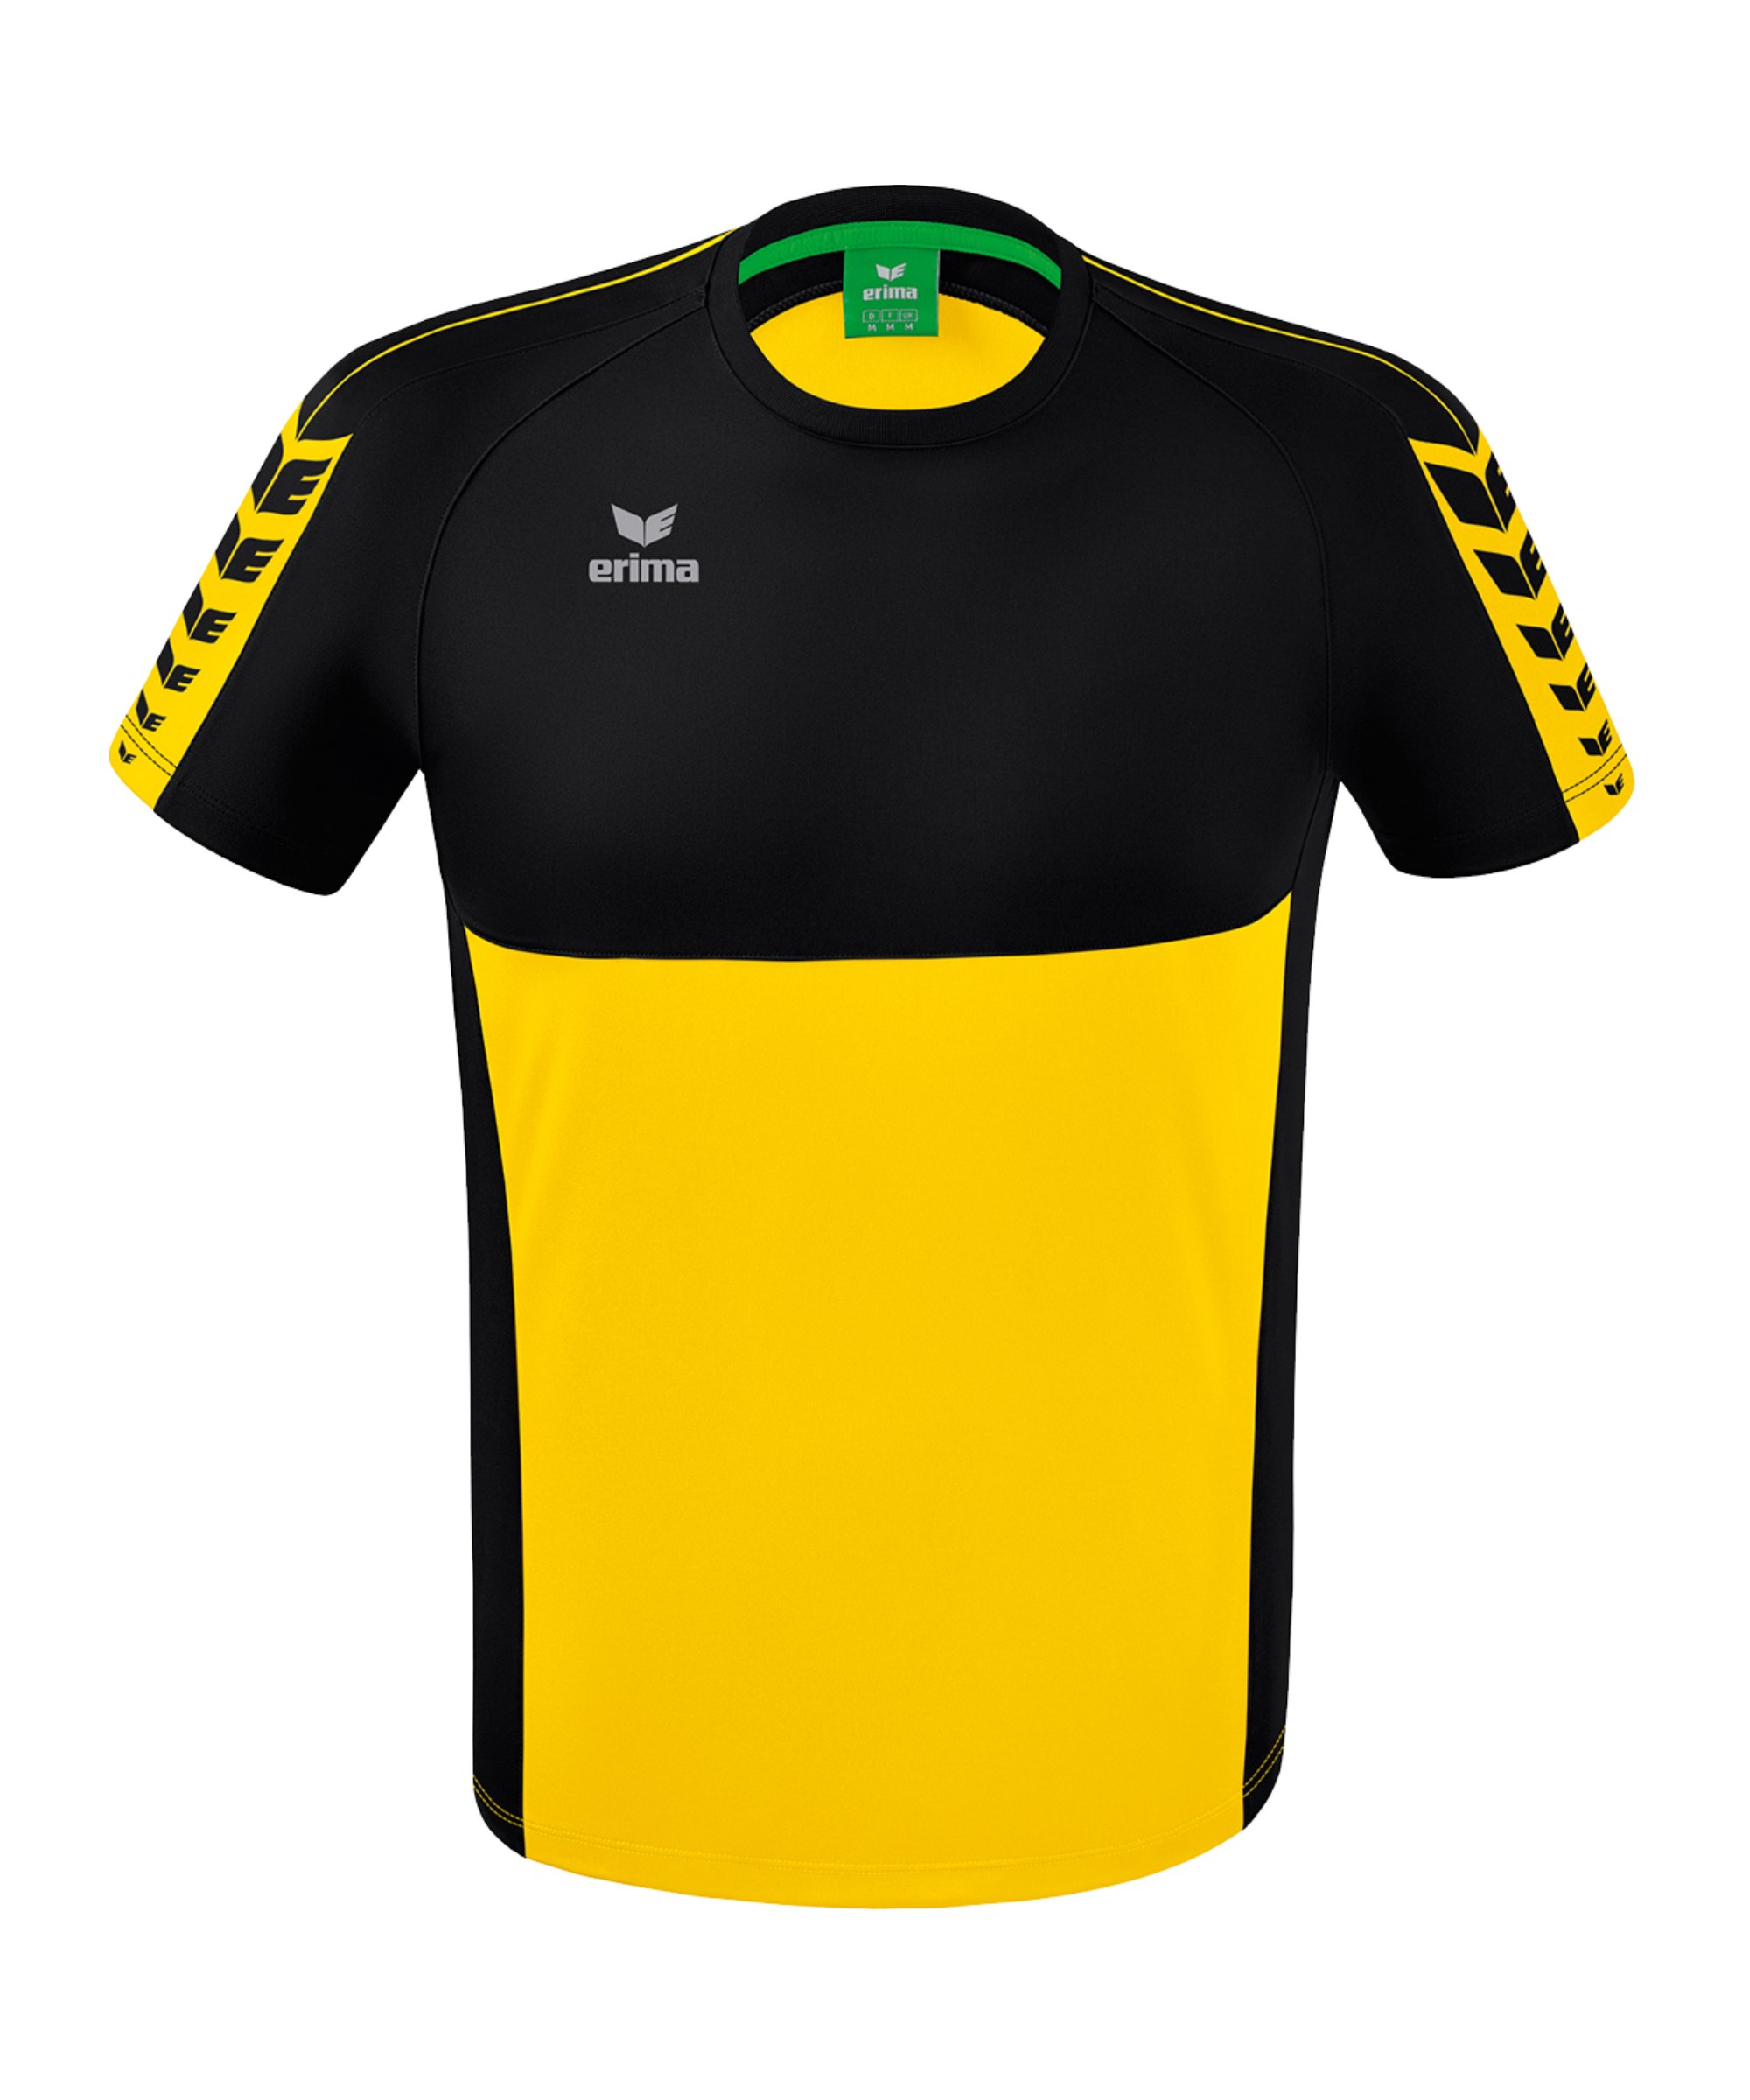 Erima Six Wings T-Shirt Gelb Schwarz - gelb